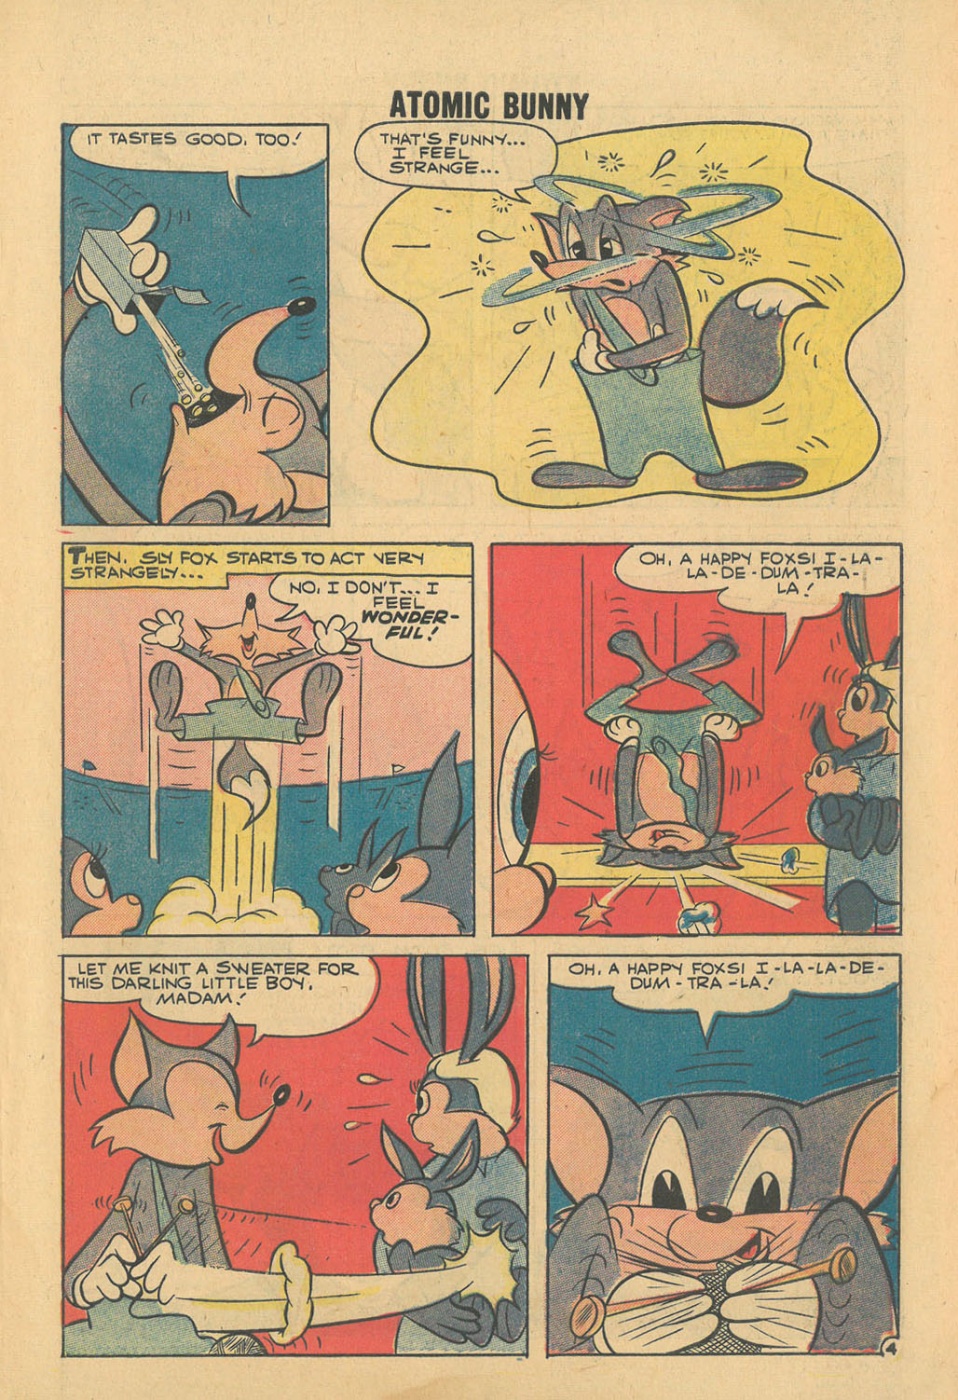 Atomic-Bunny-Comic-Strips (c) (7)